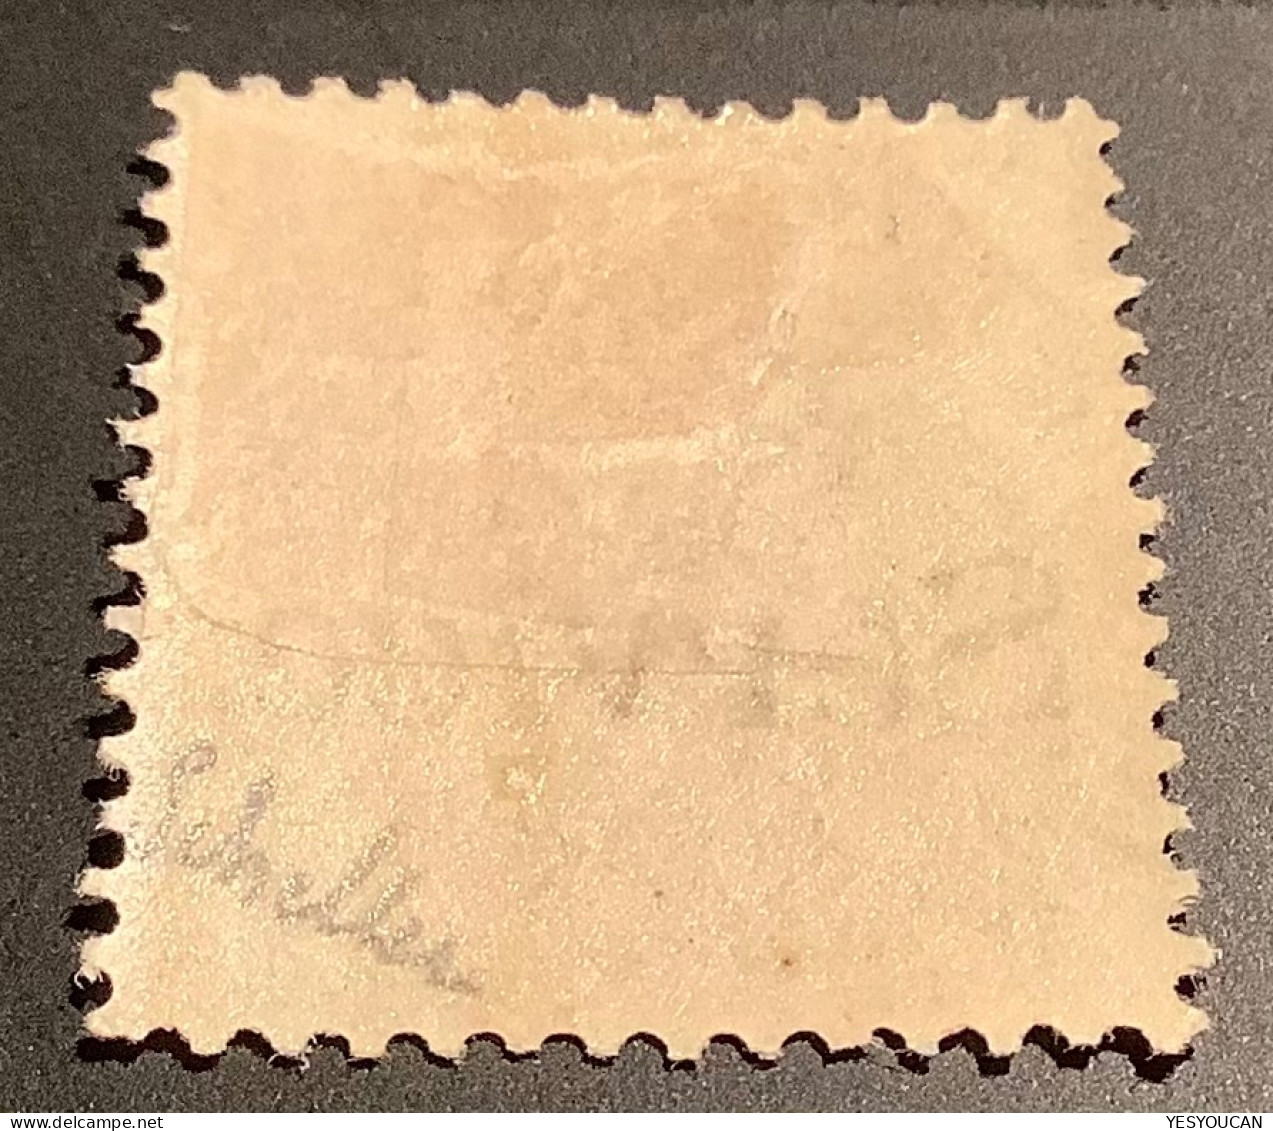 India 1867-73 Official Stamp: SERVICE Overprint Queen Victoria 2 Anna Fine Mint With Original Gum  (Signed Scheller Inde - 1858-79 Compagnie Des Indes & Gouvernement De La Reine